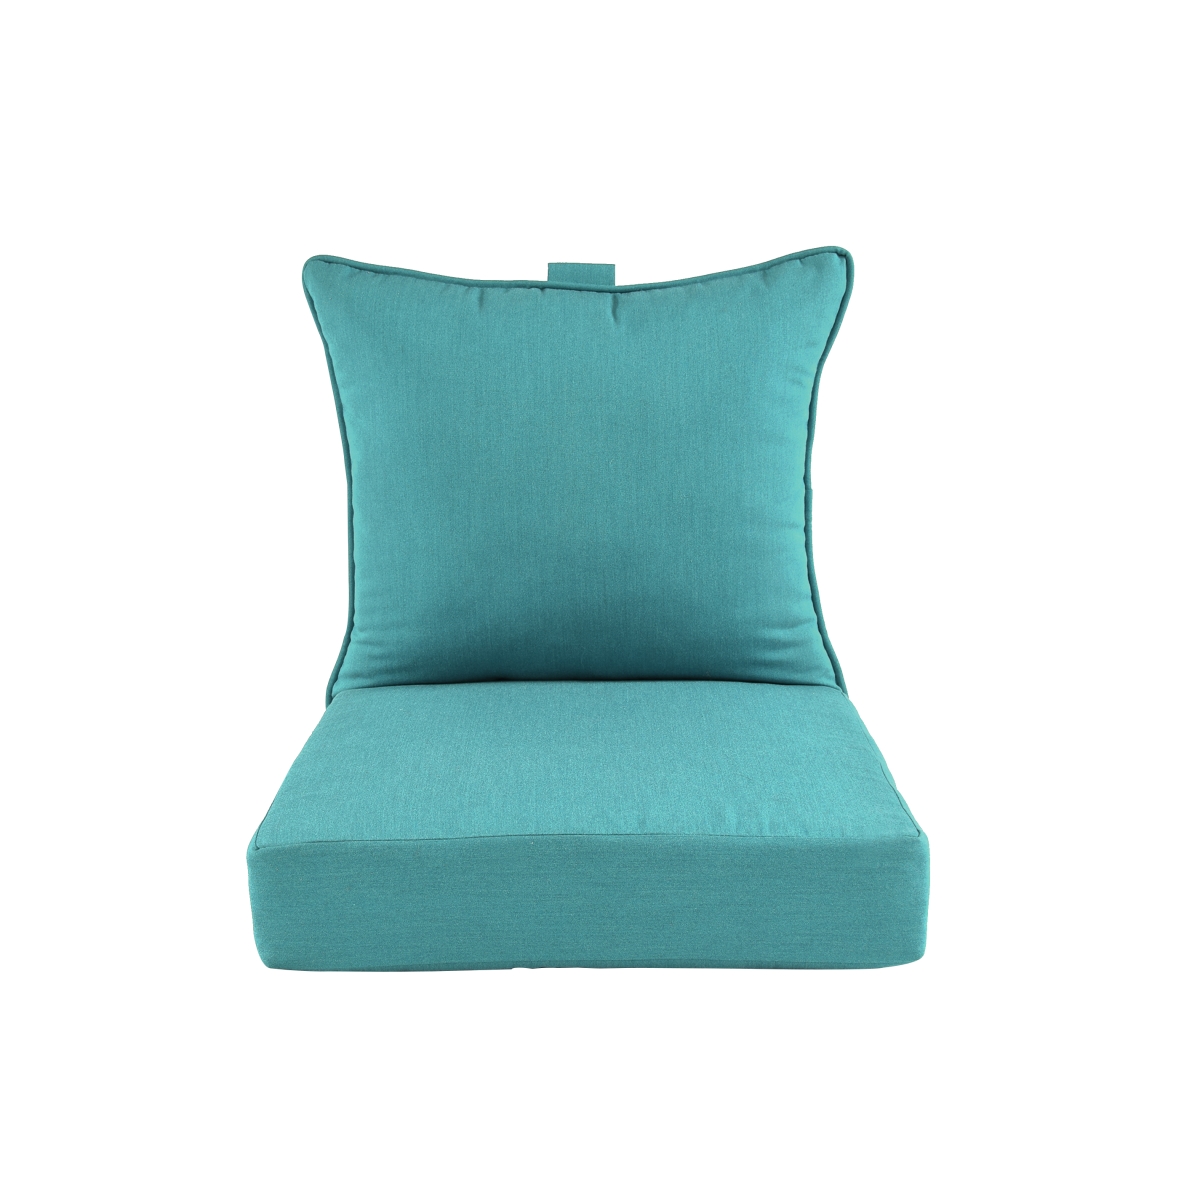 Cuds46-sda16 46.5 X 24 In. Pacifica Premium Deep Seat Lounge Cushion In Surf